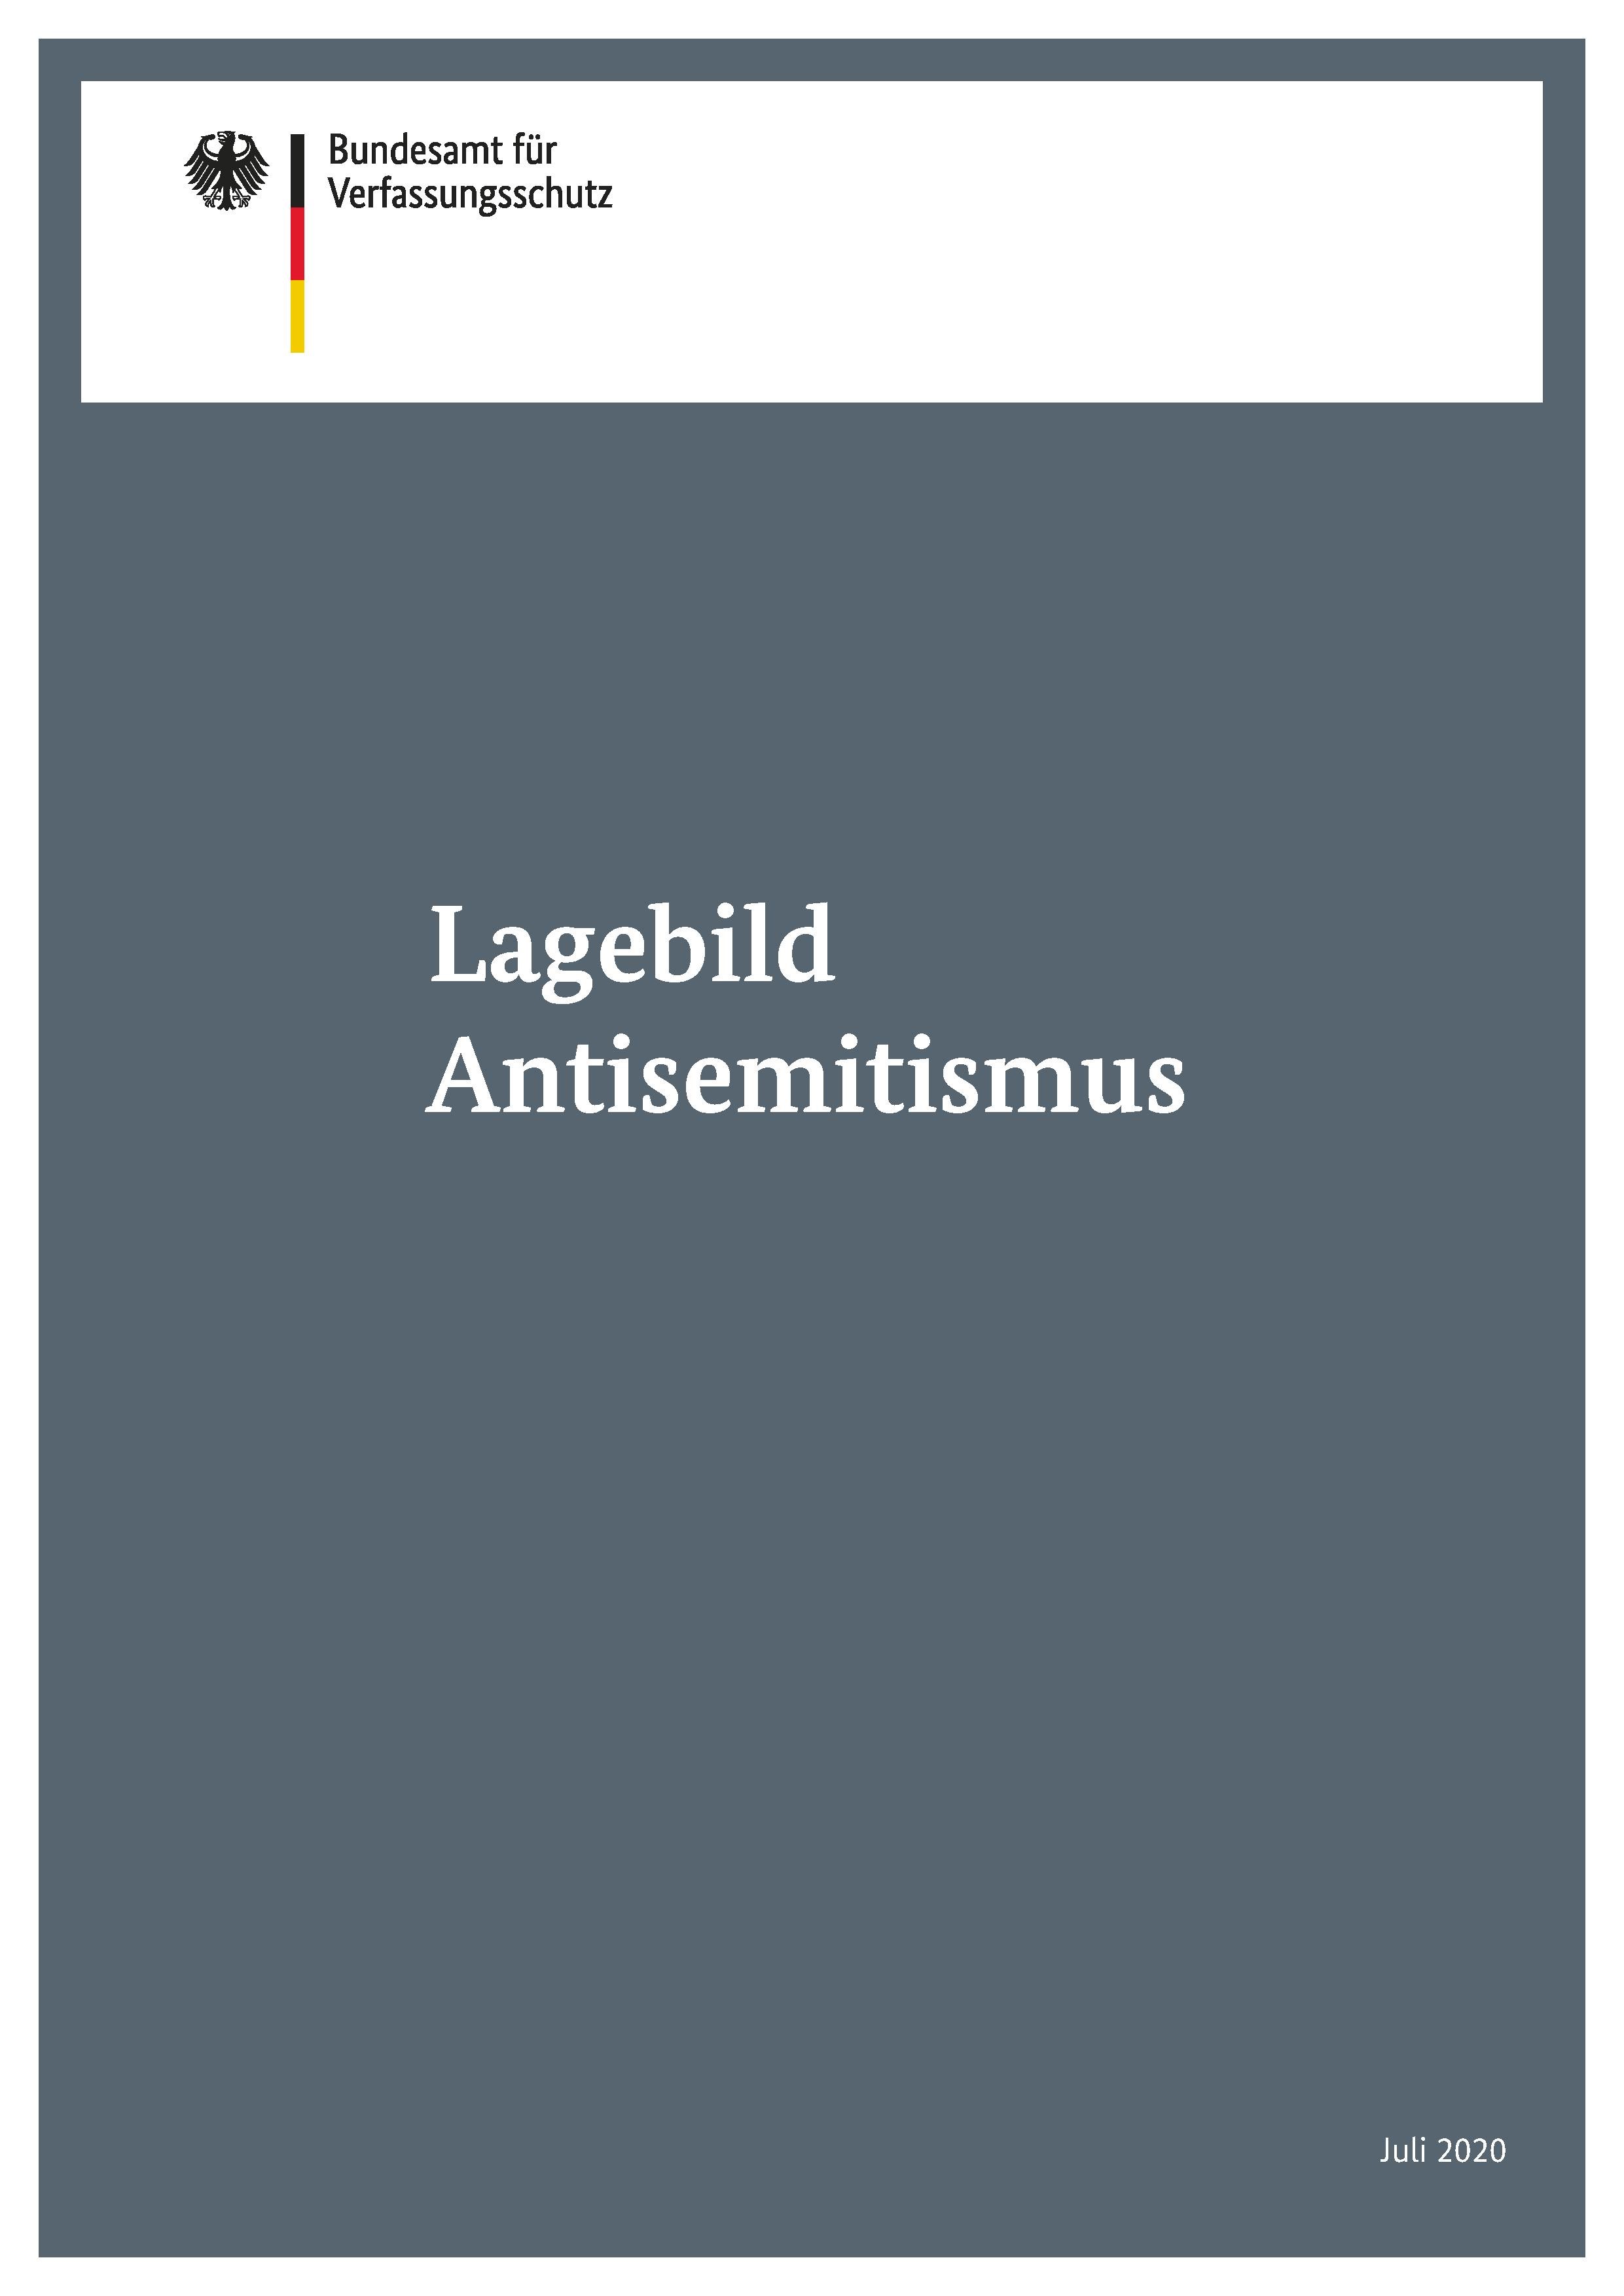 Lagebild_Antisemitismus_BfV.jpg